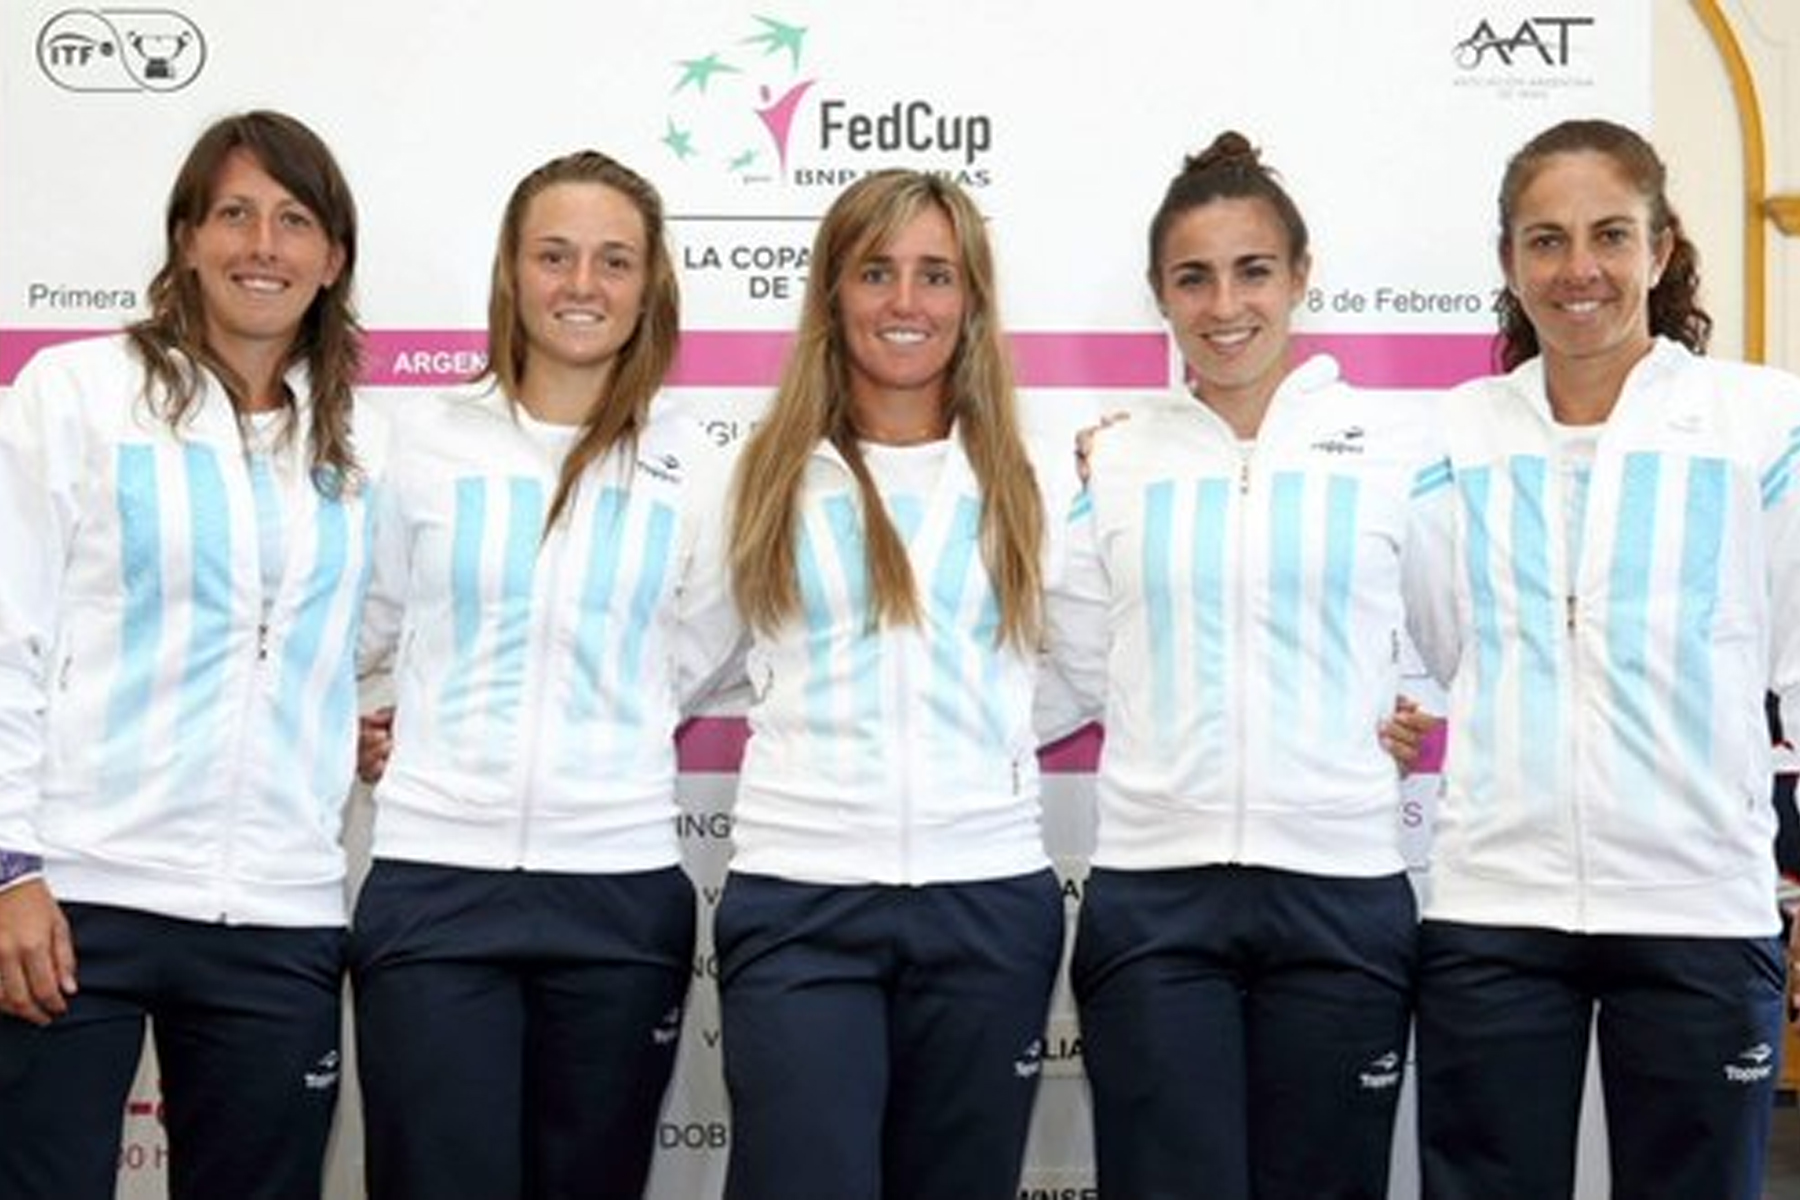 Ya se anunció el equipo argentino para la Fed Cup 2016